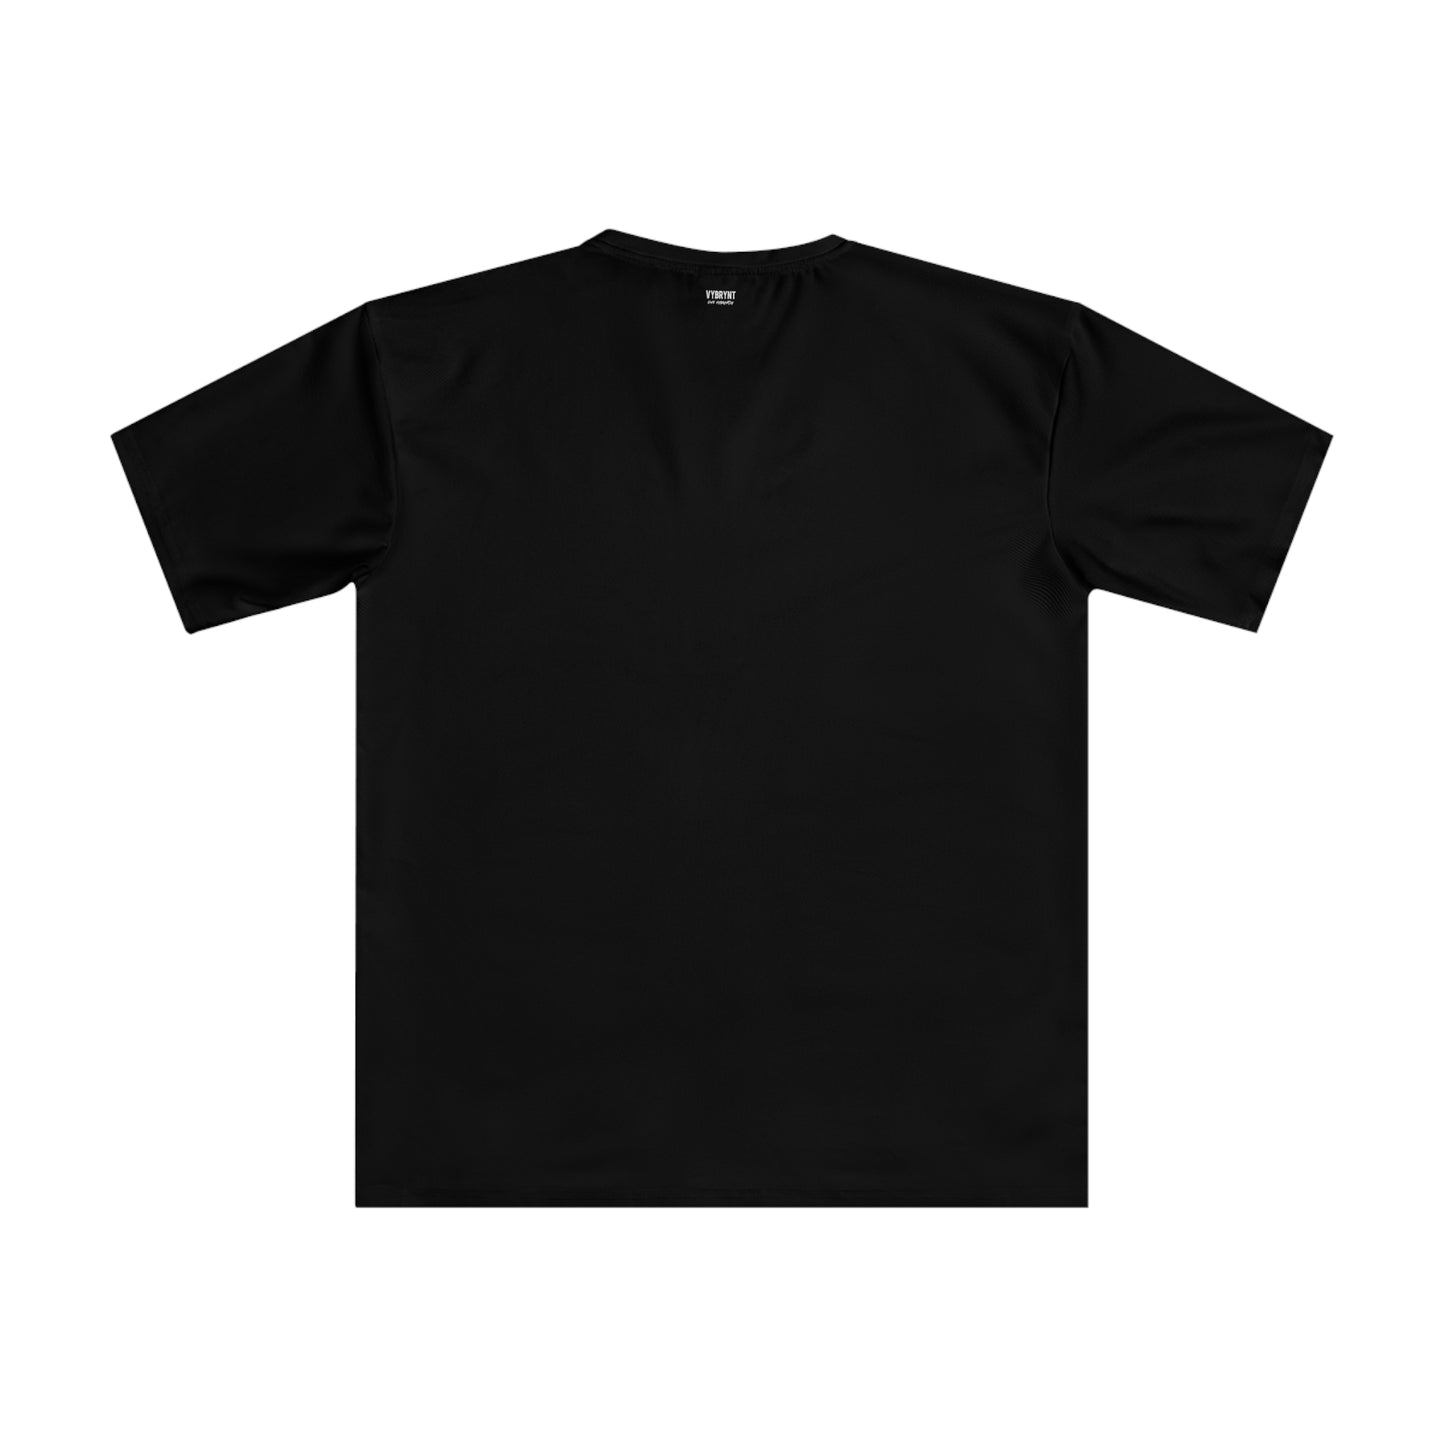 Sylvia's Men's Black T-shirt